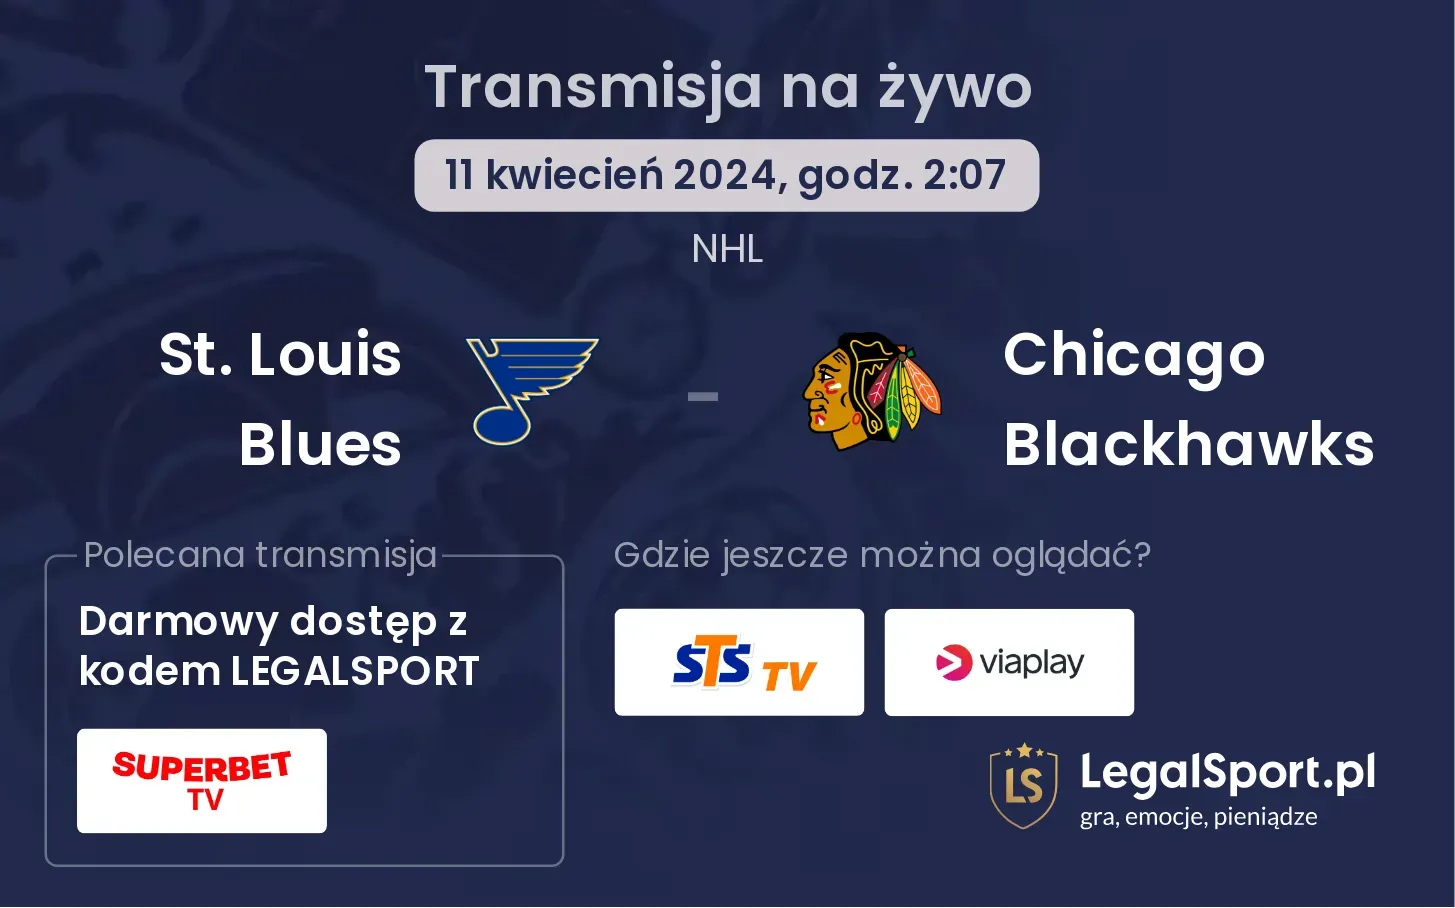 St. Louis Blues - Chicago Blackhawks transmisja na żywo